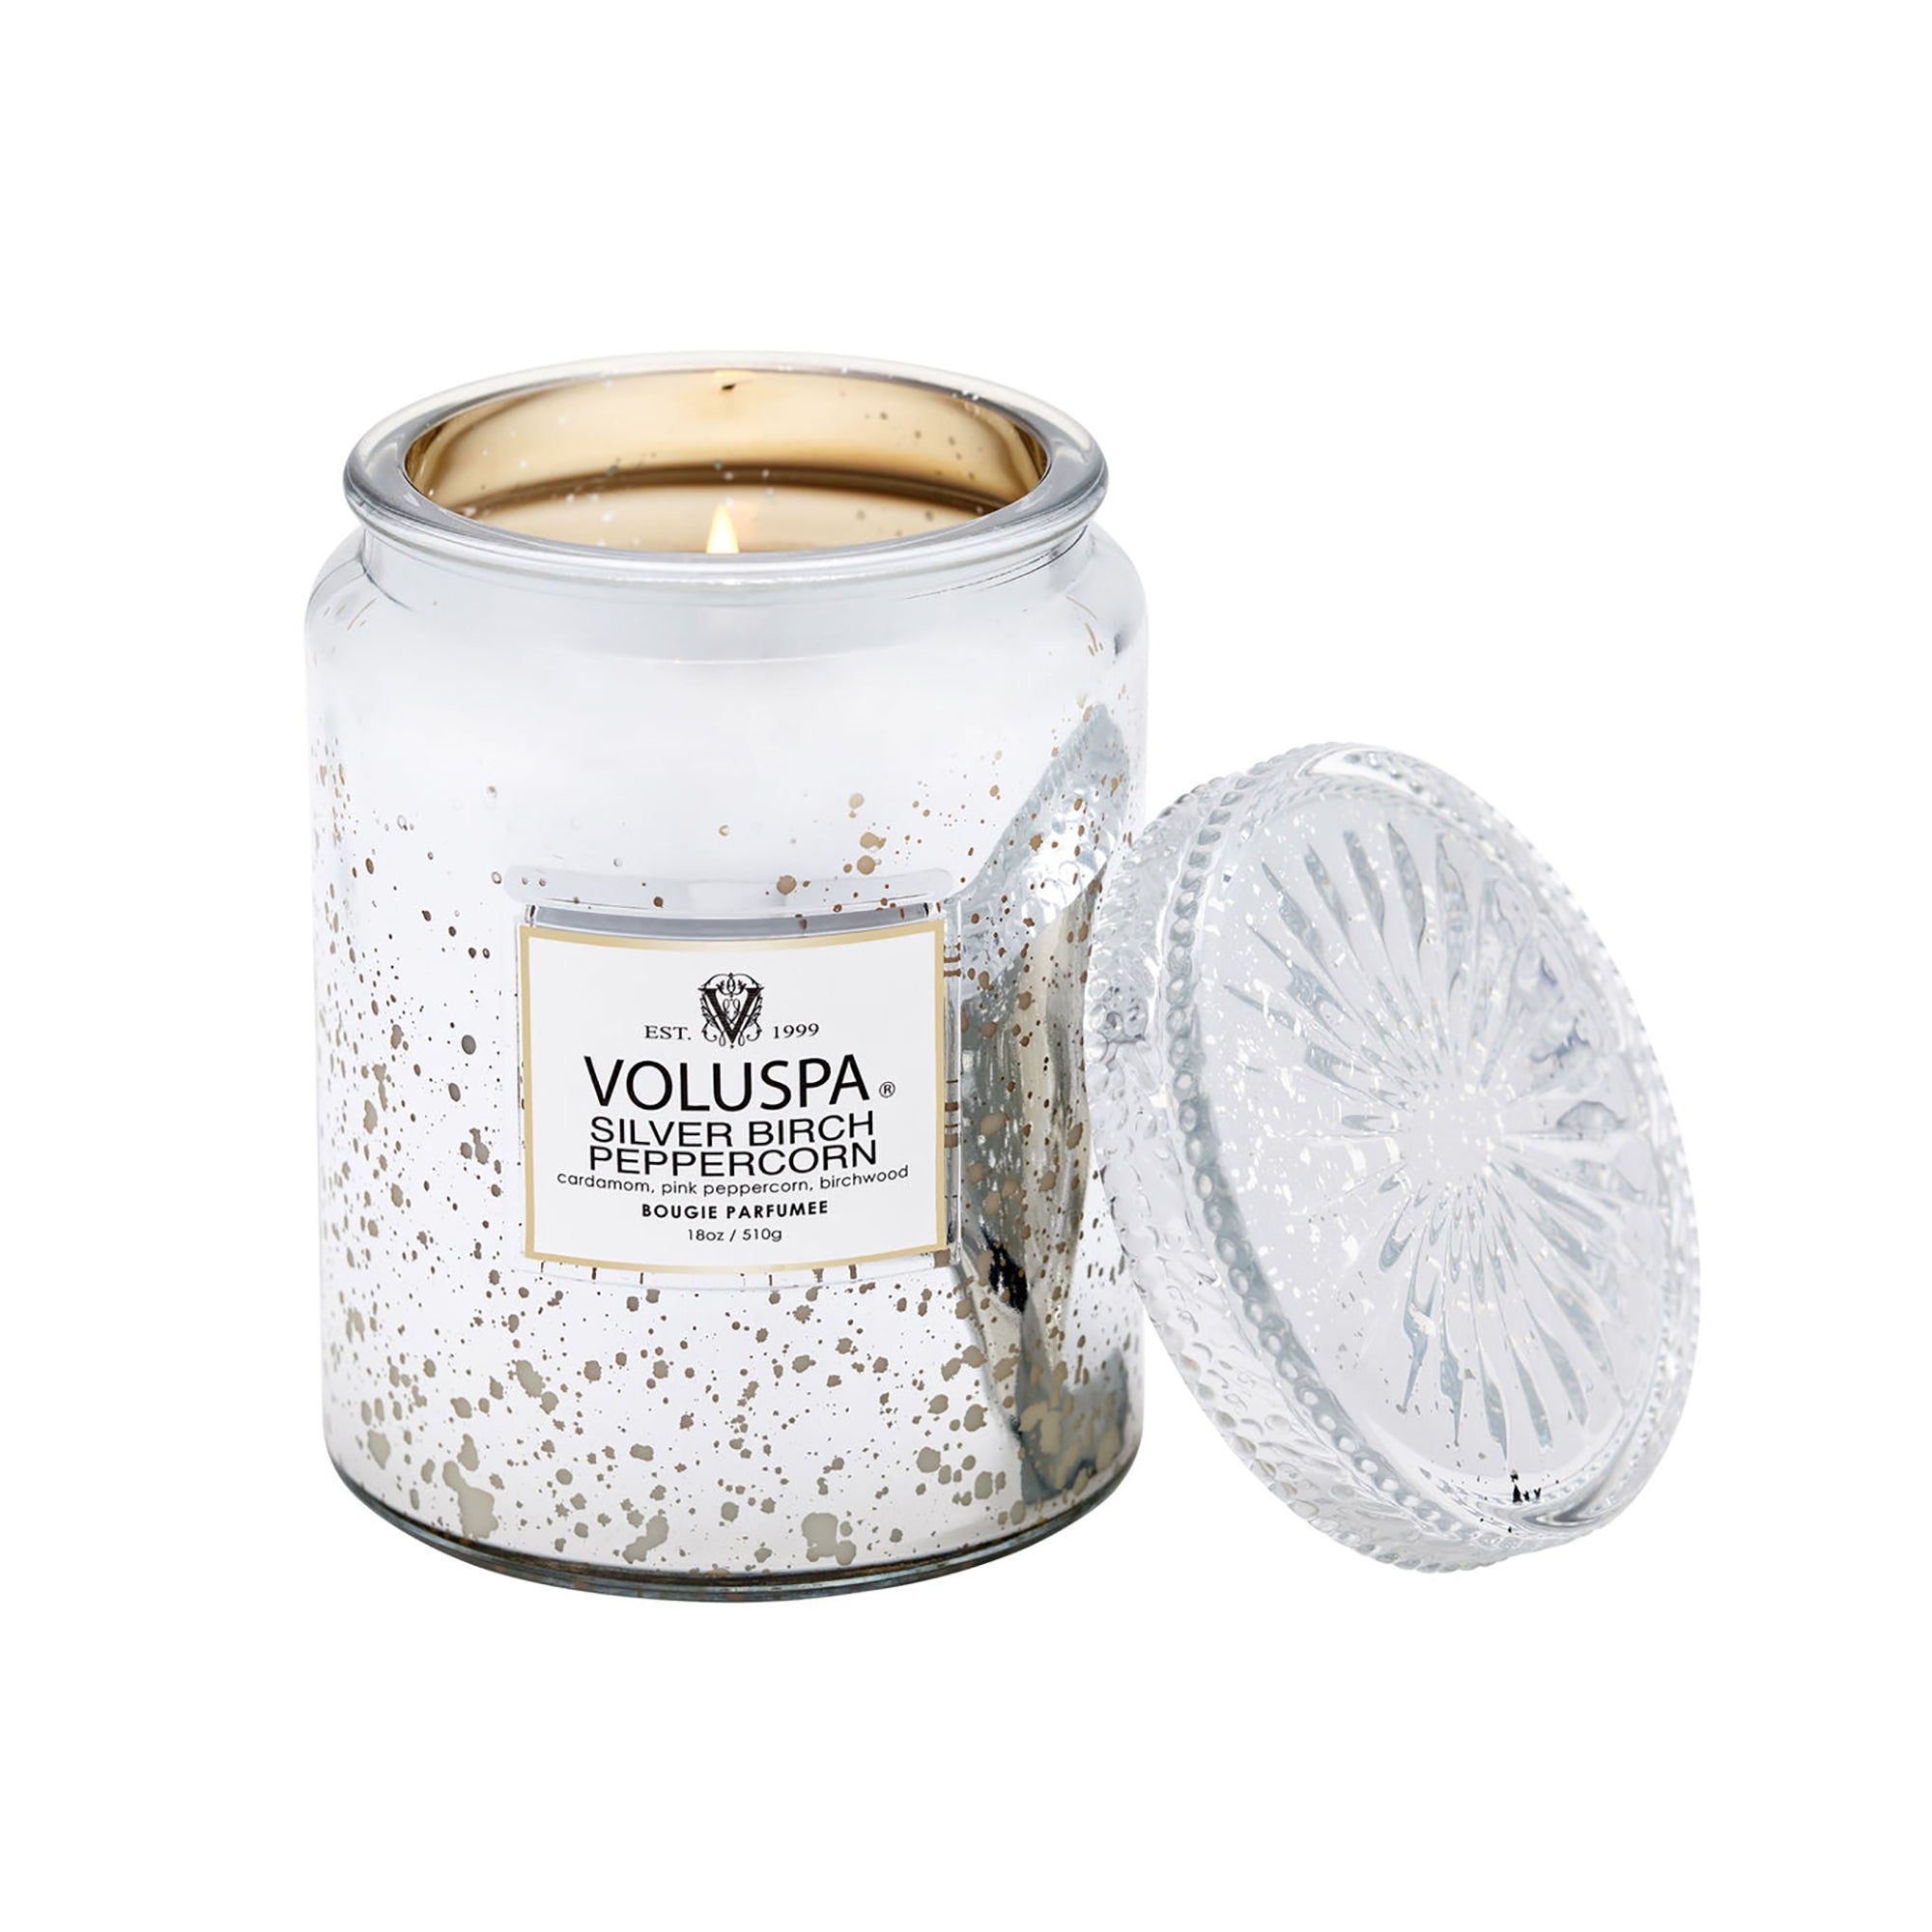 Voluspa Vermeil Large Jar Candle 18oz / Silver Birch Peppercorn